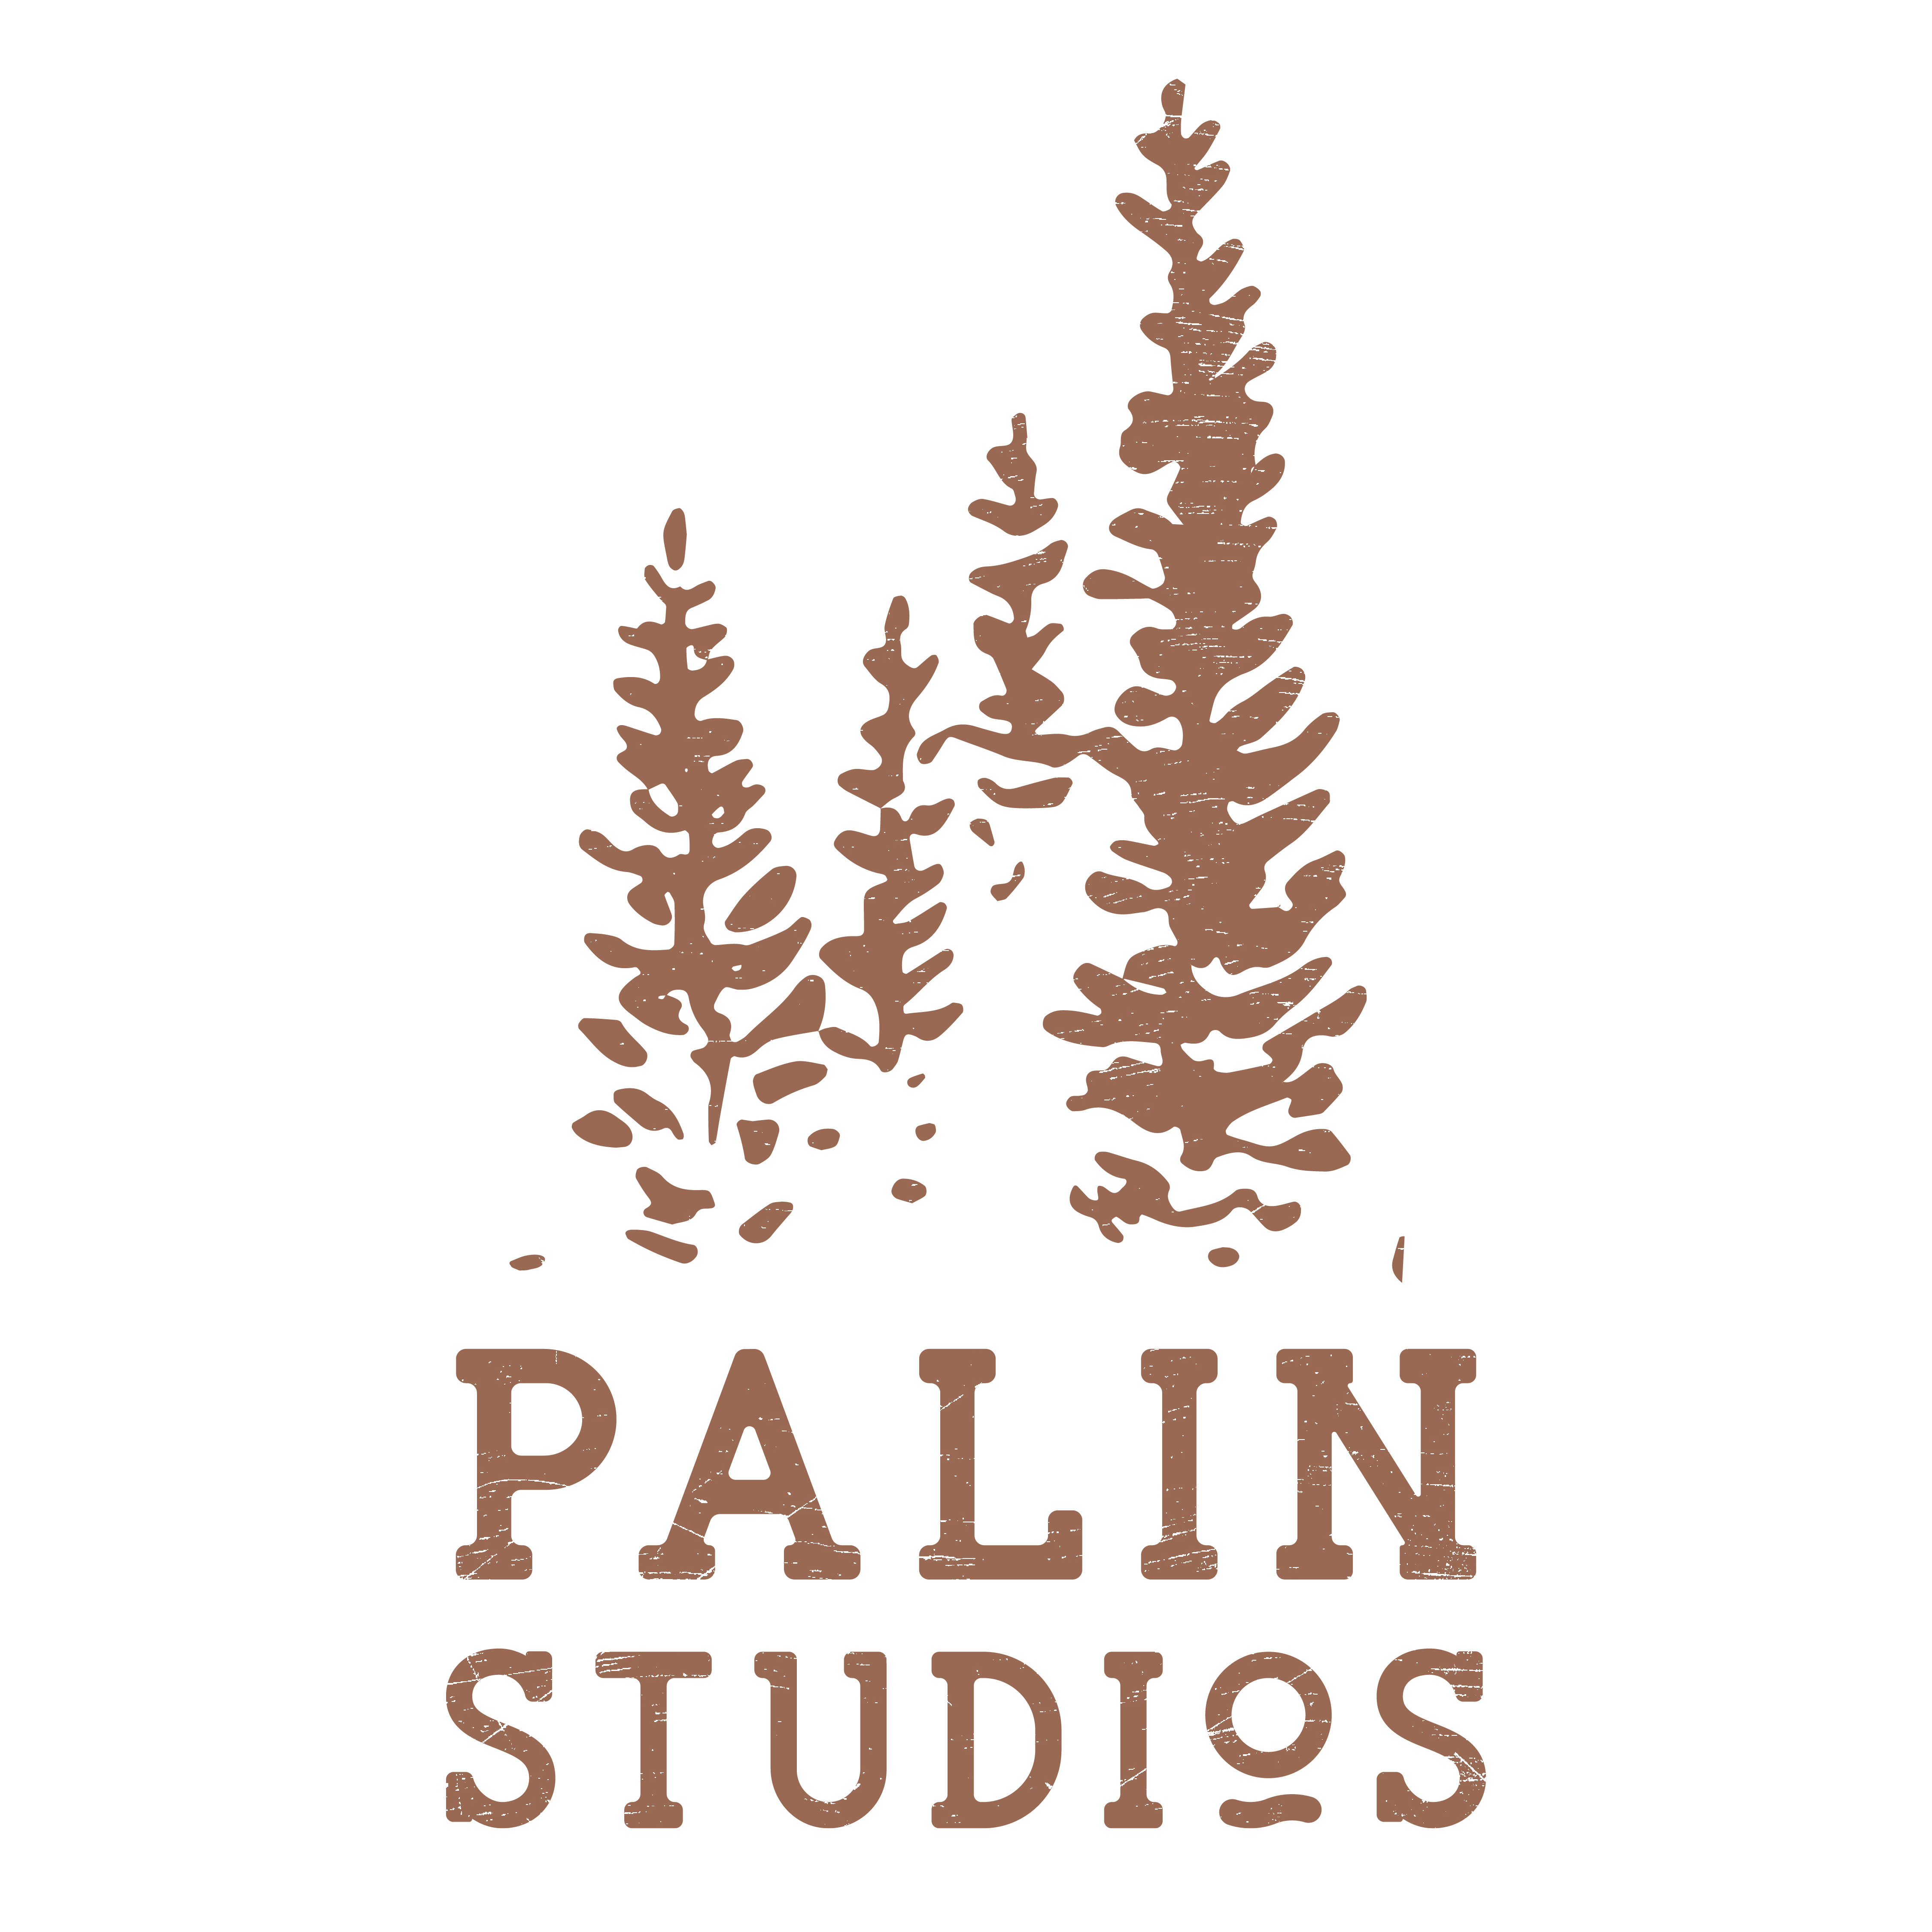 Palin Studios